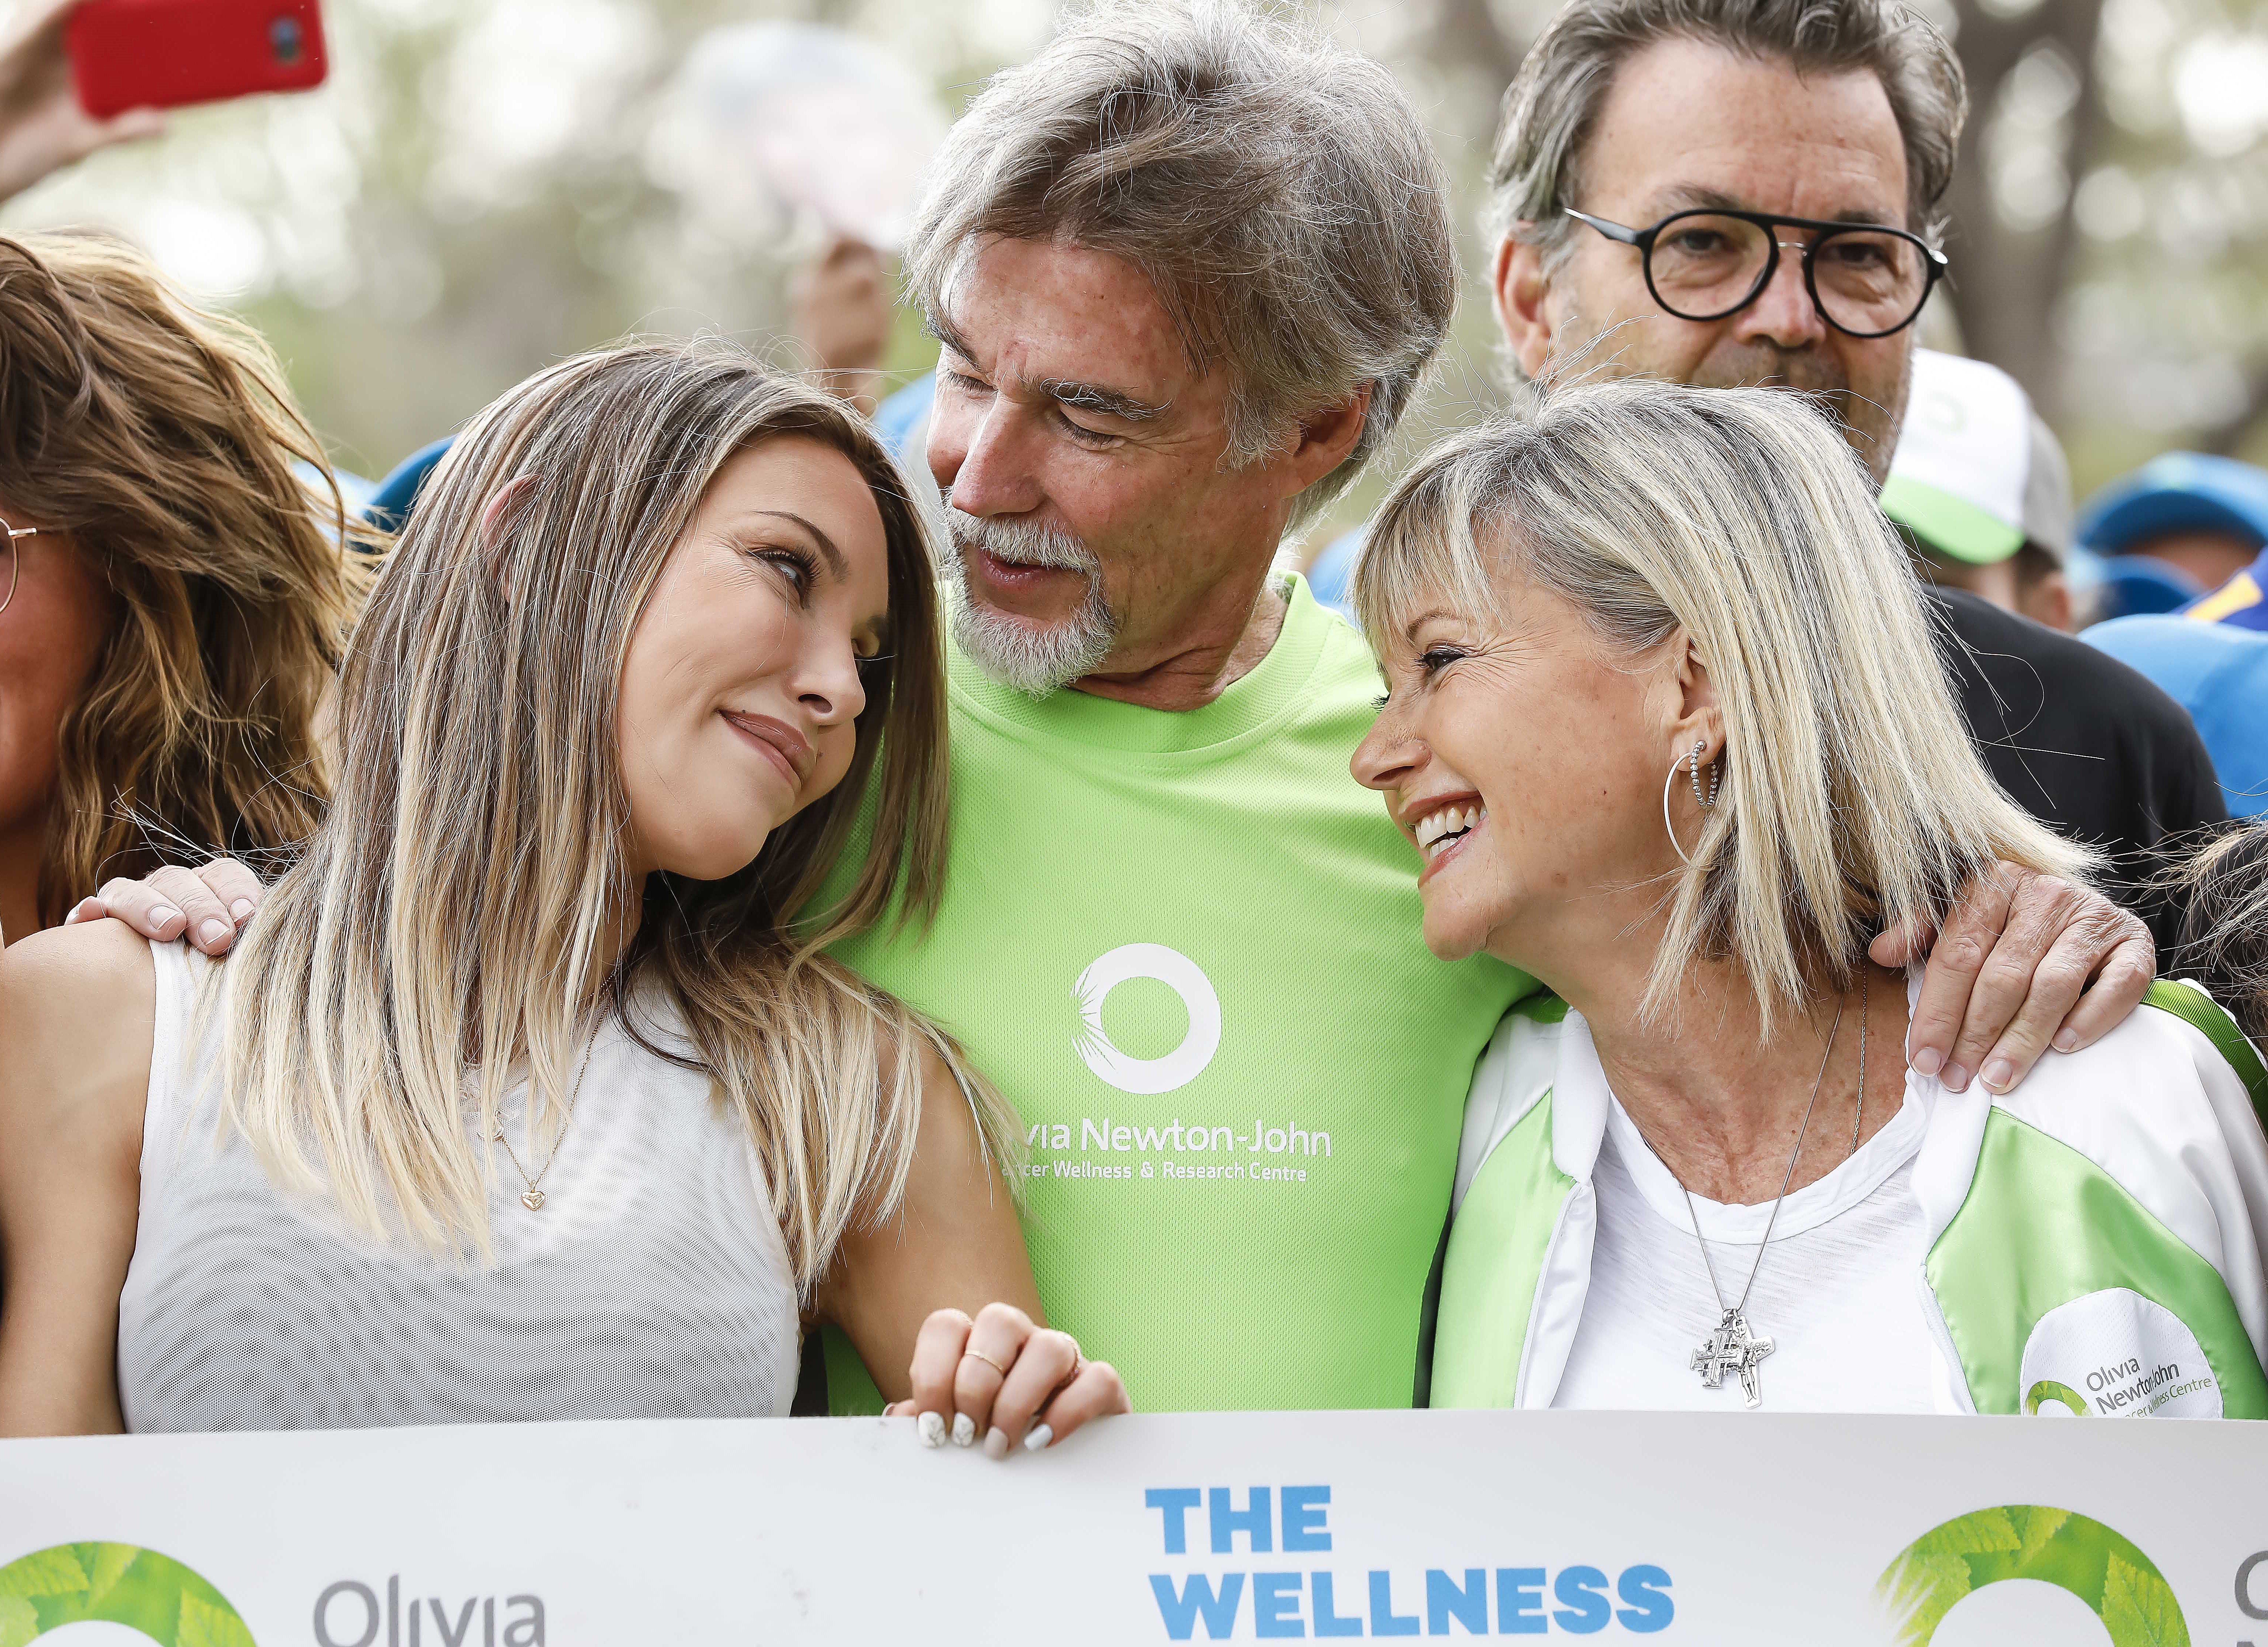 Olivia Newton-John's daughter, Chloe Lattanzi, and husband, John Easterling, smiling at the star's Wellness Walk and Research Run